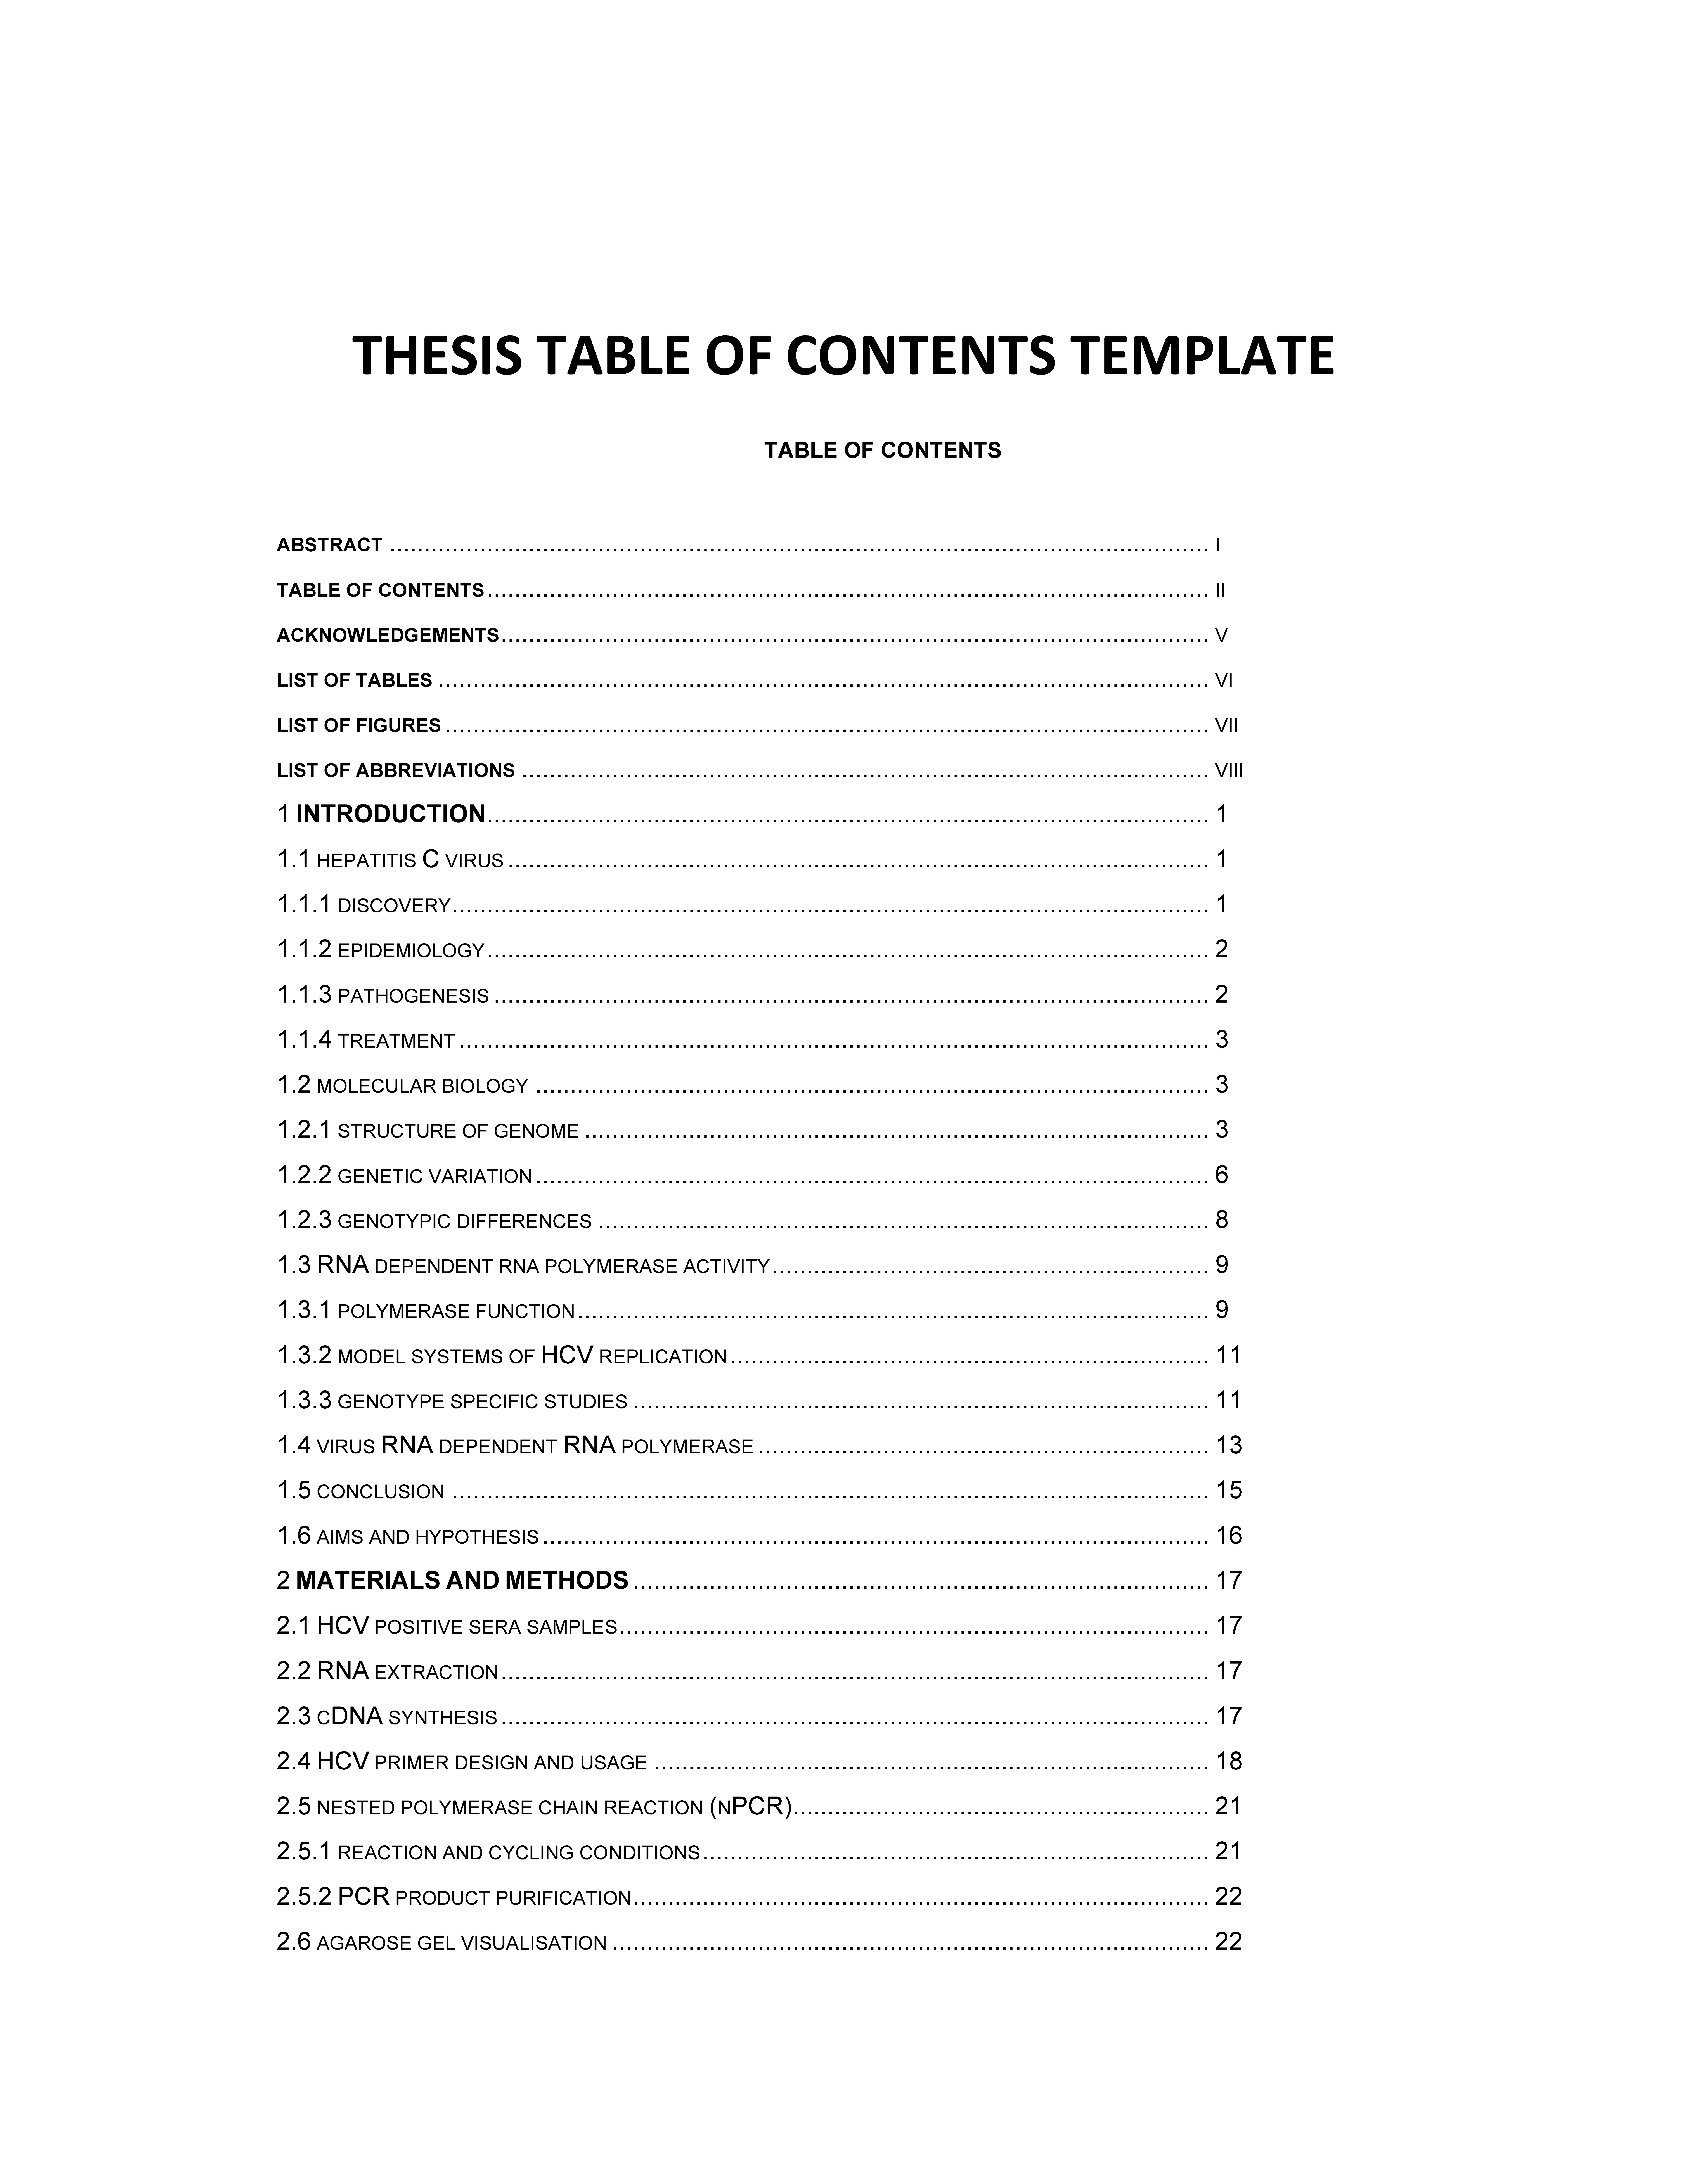 thesis table of contents template plantilla imagen principal